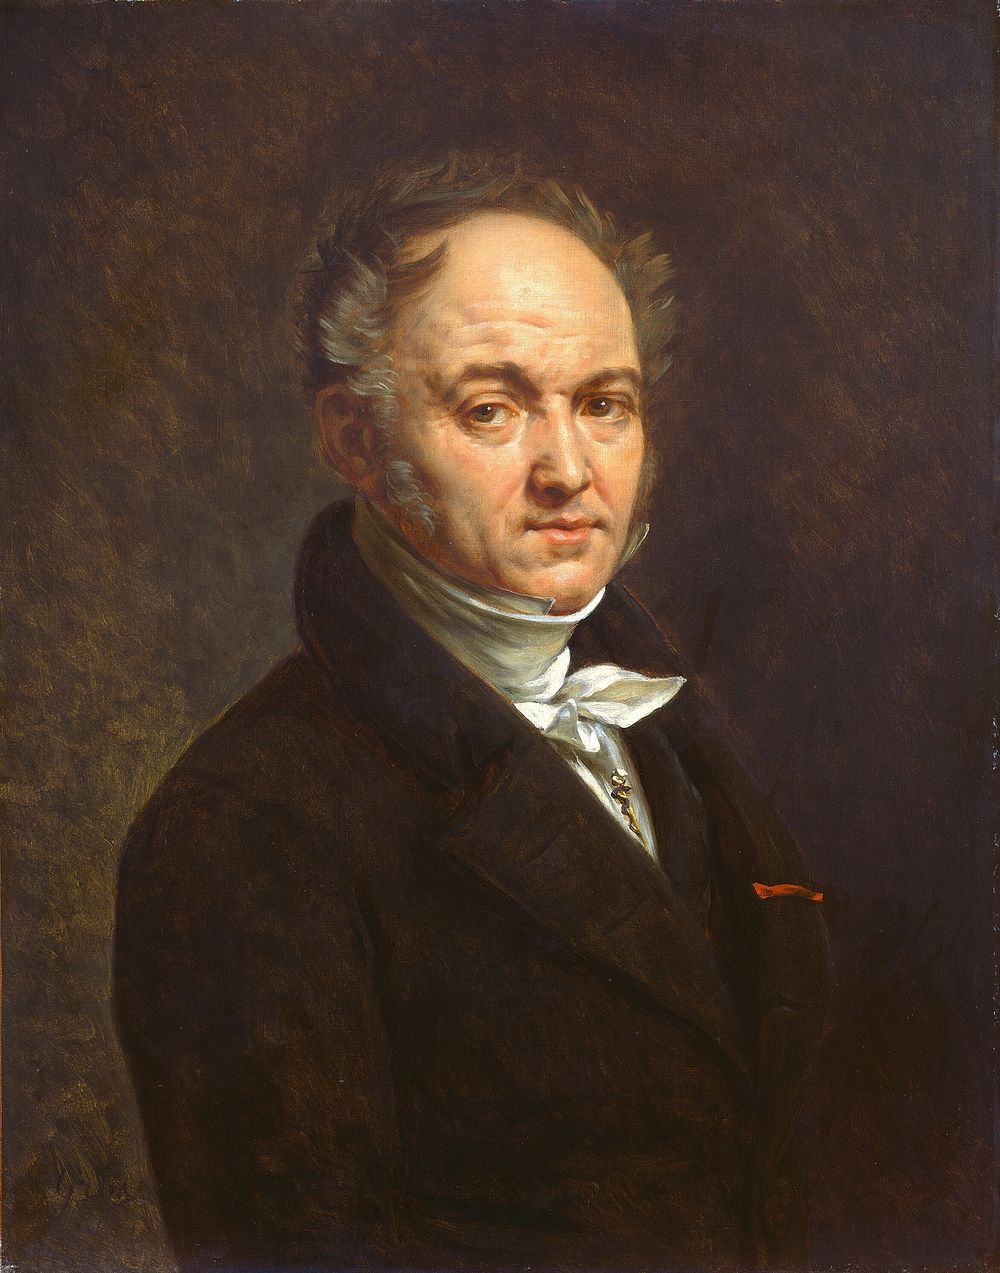 Dr. Vignardonne (1827) by Antoine&ndash;Jean Gros.  